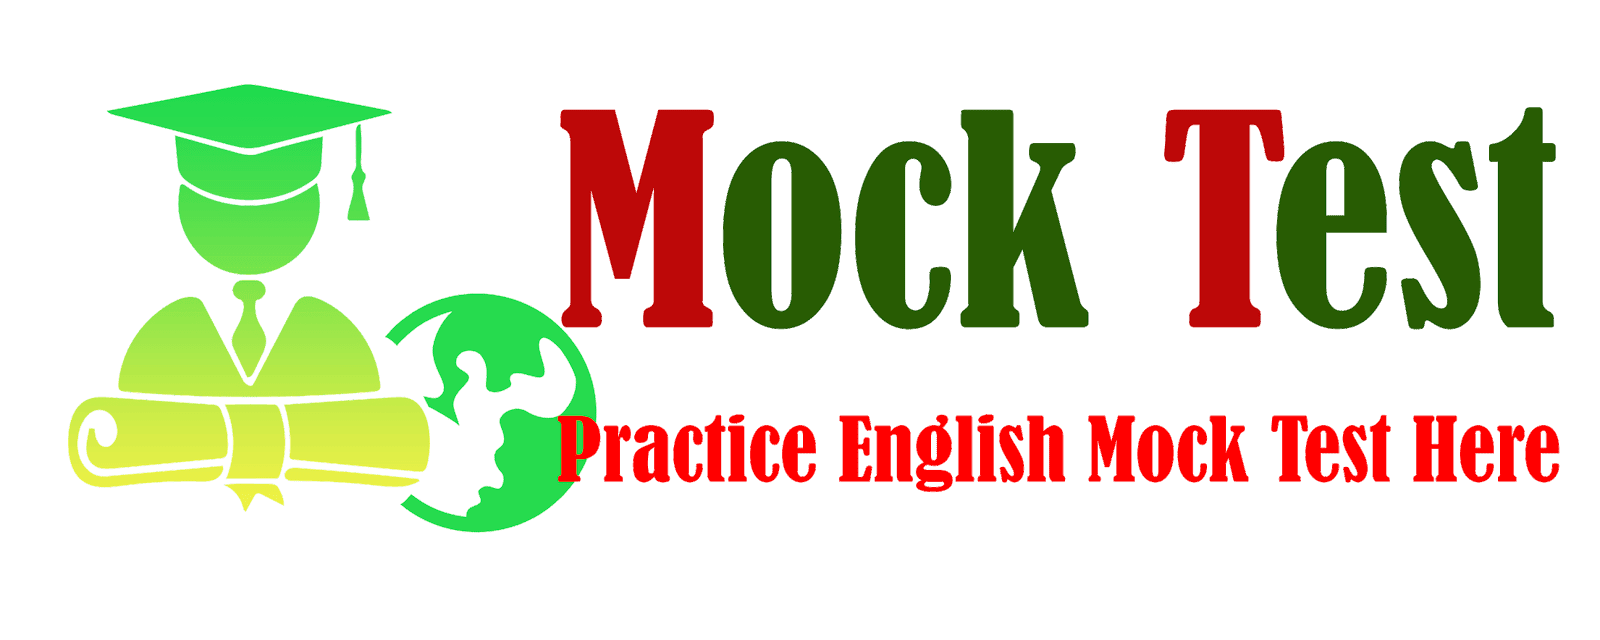 Mock Test English